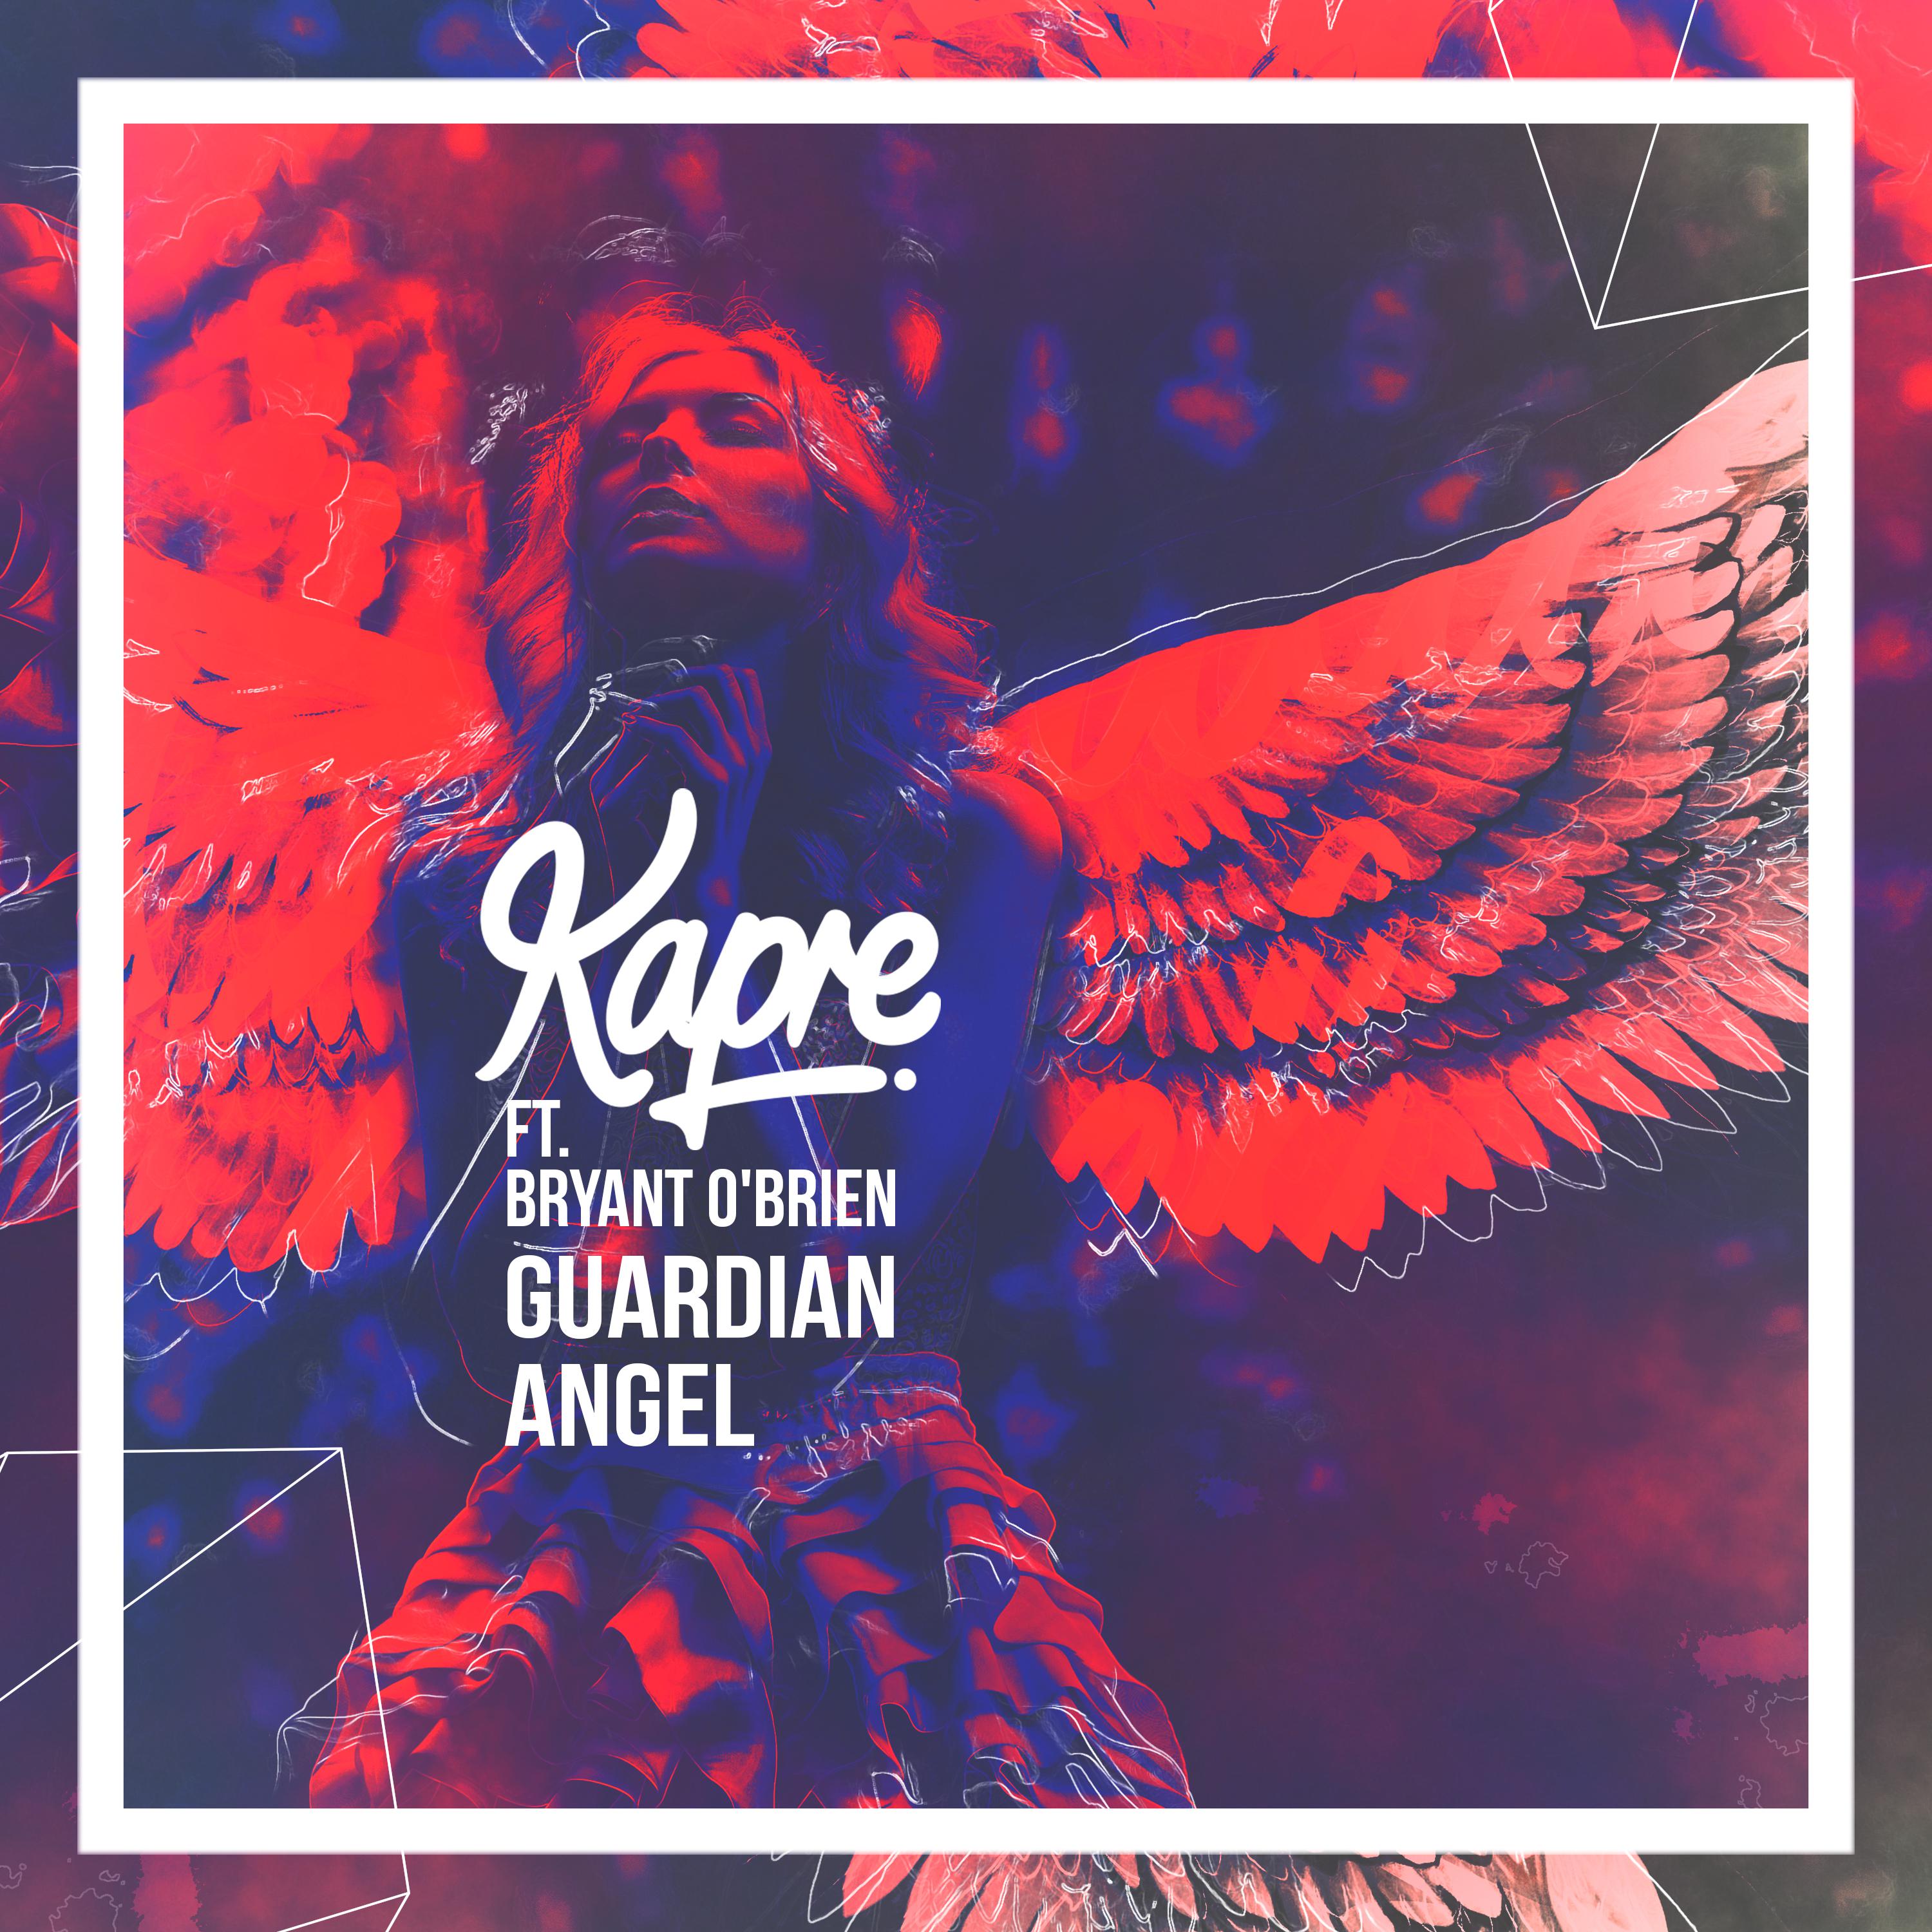 Kapre - Guardian Angel (feat. Bryant O'Brien)